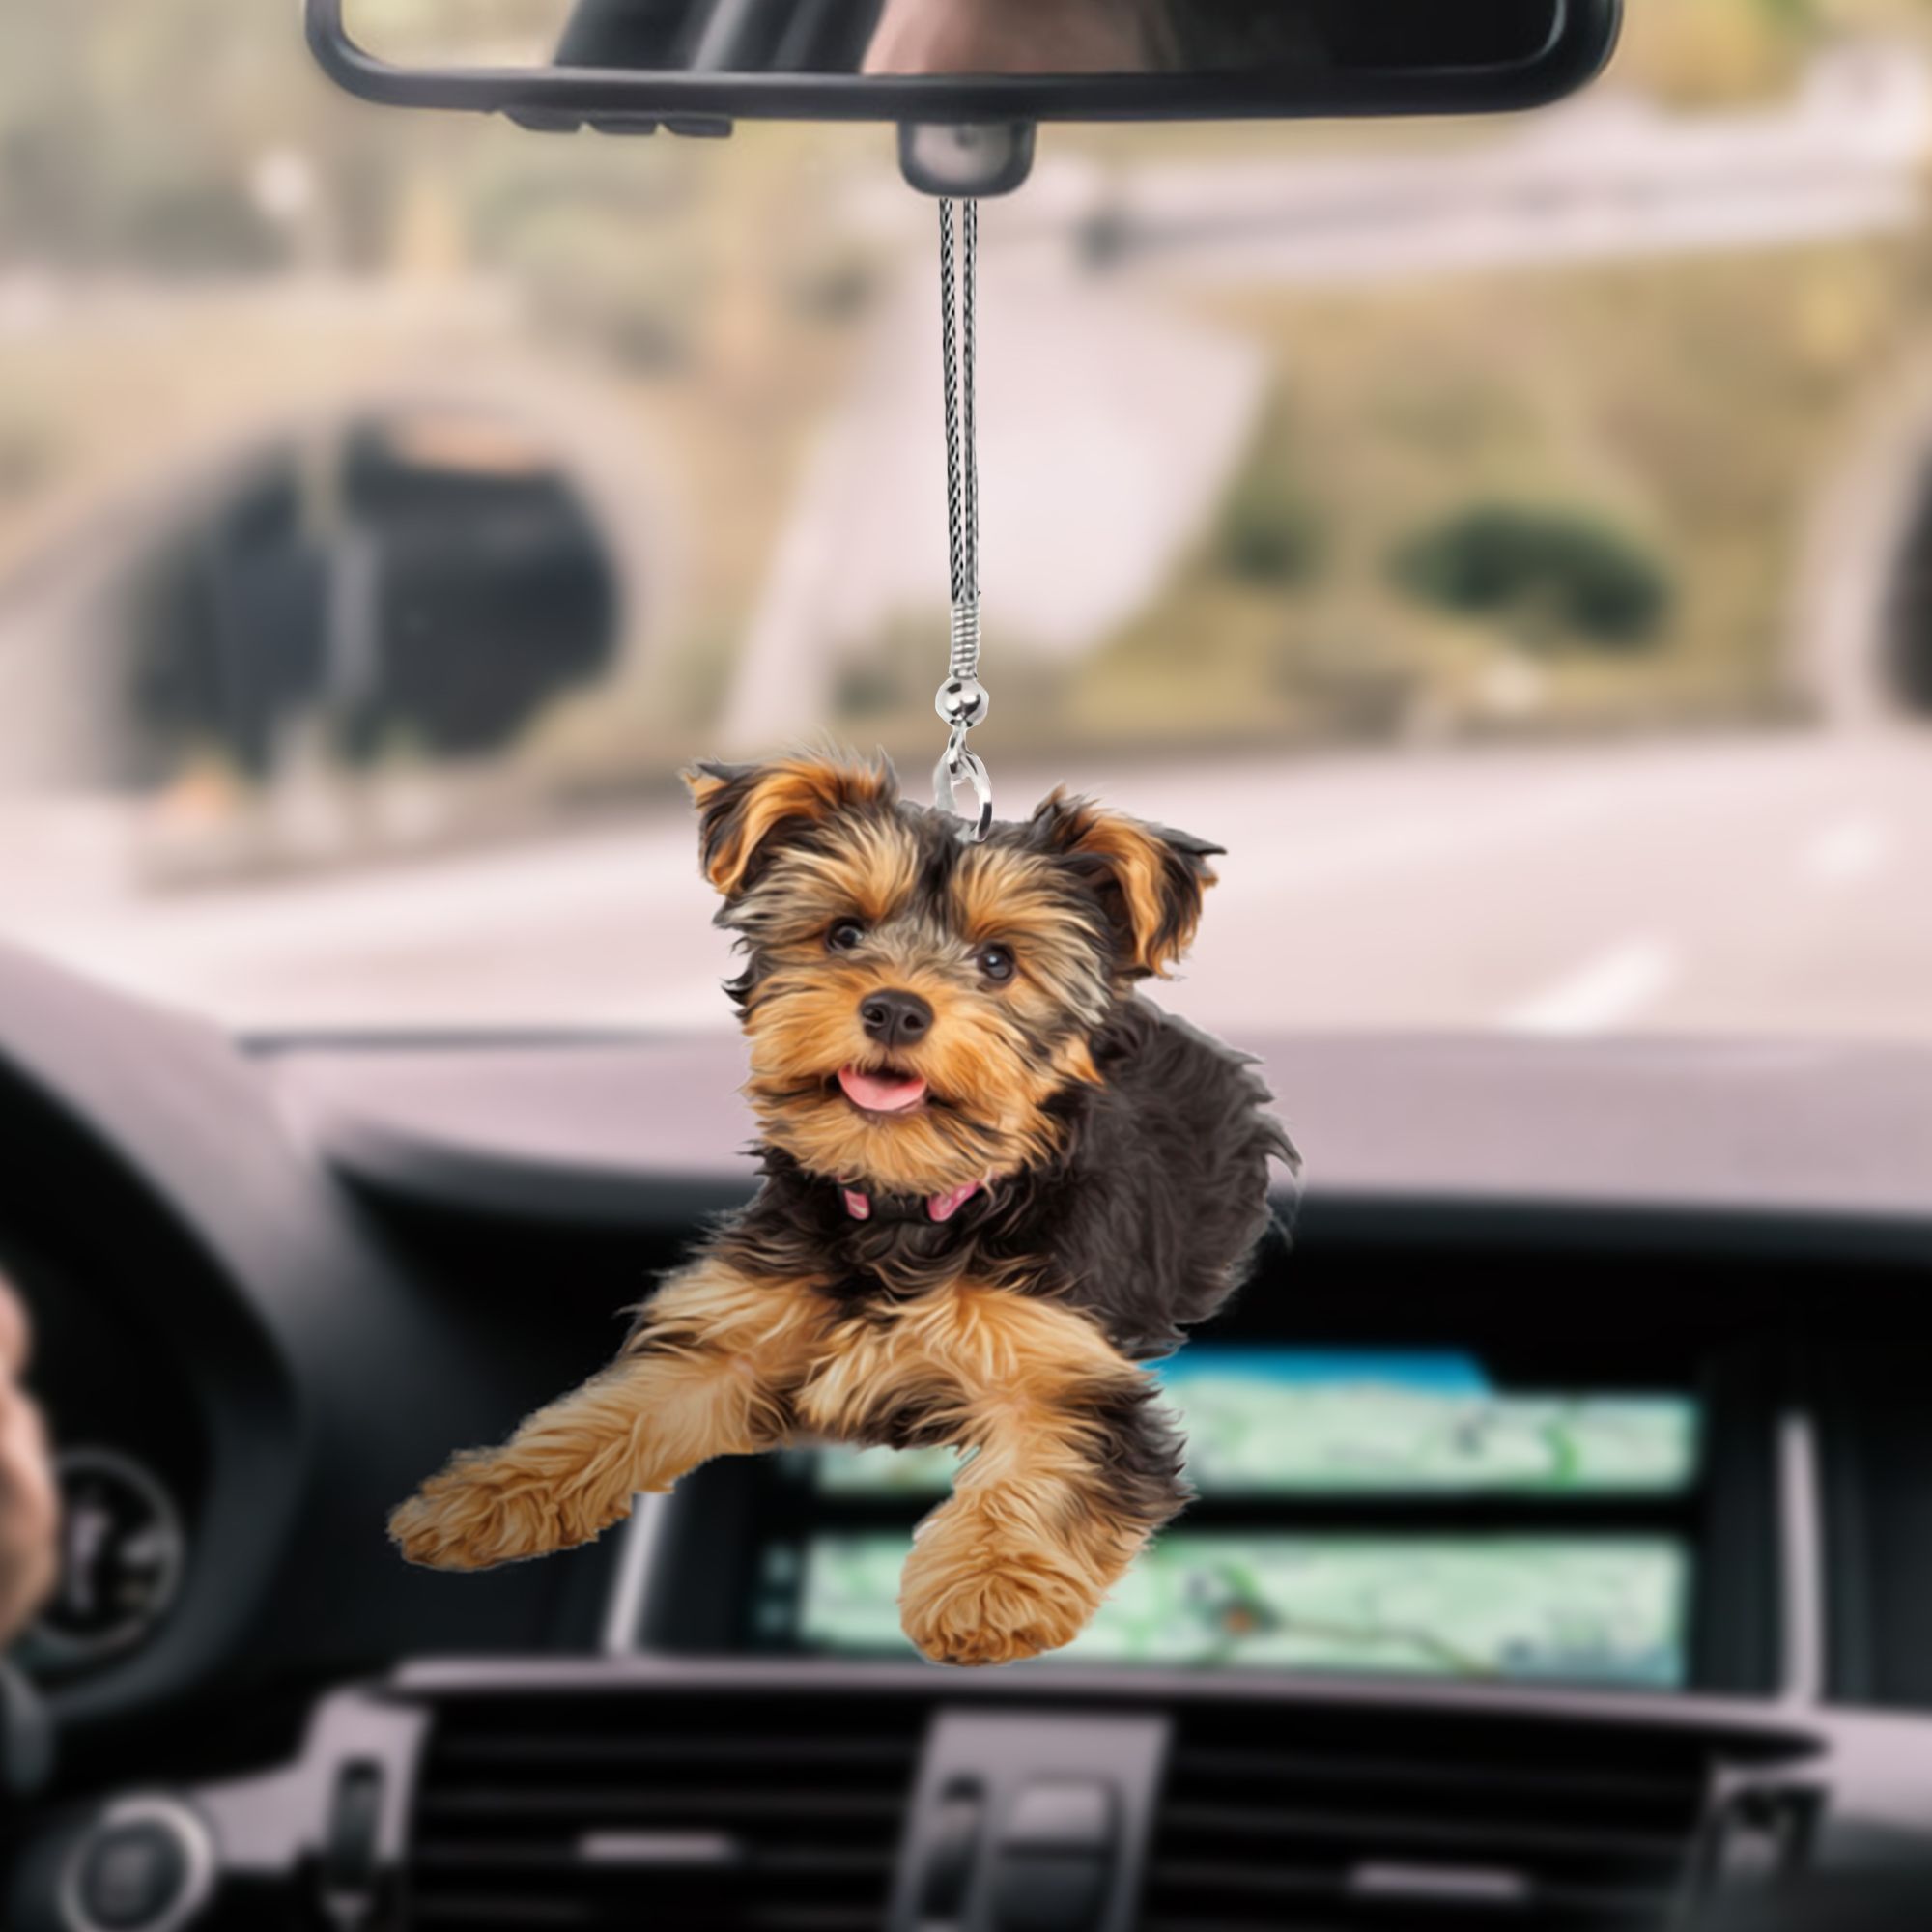 yorkshire-terrier-happy-jq97-ntt070997-dhl-car-hanging-ornament